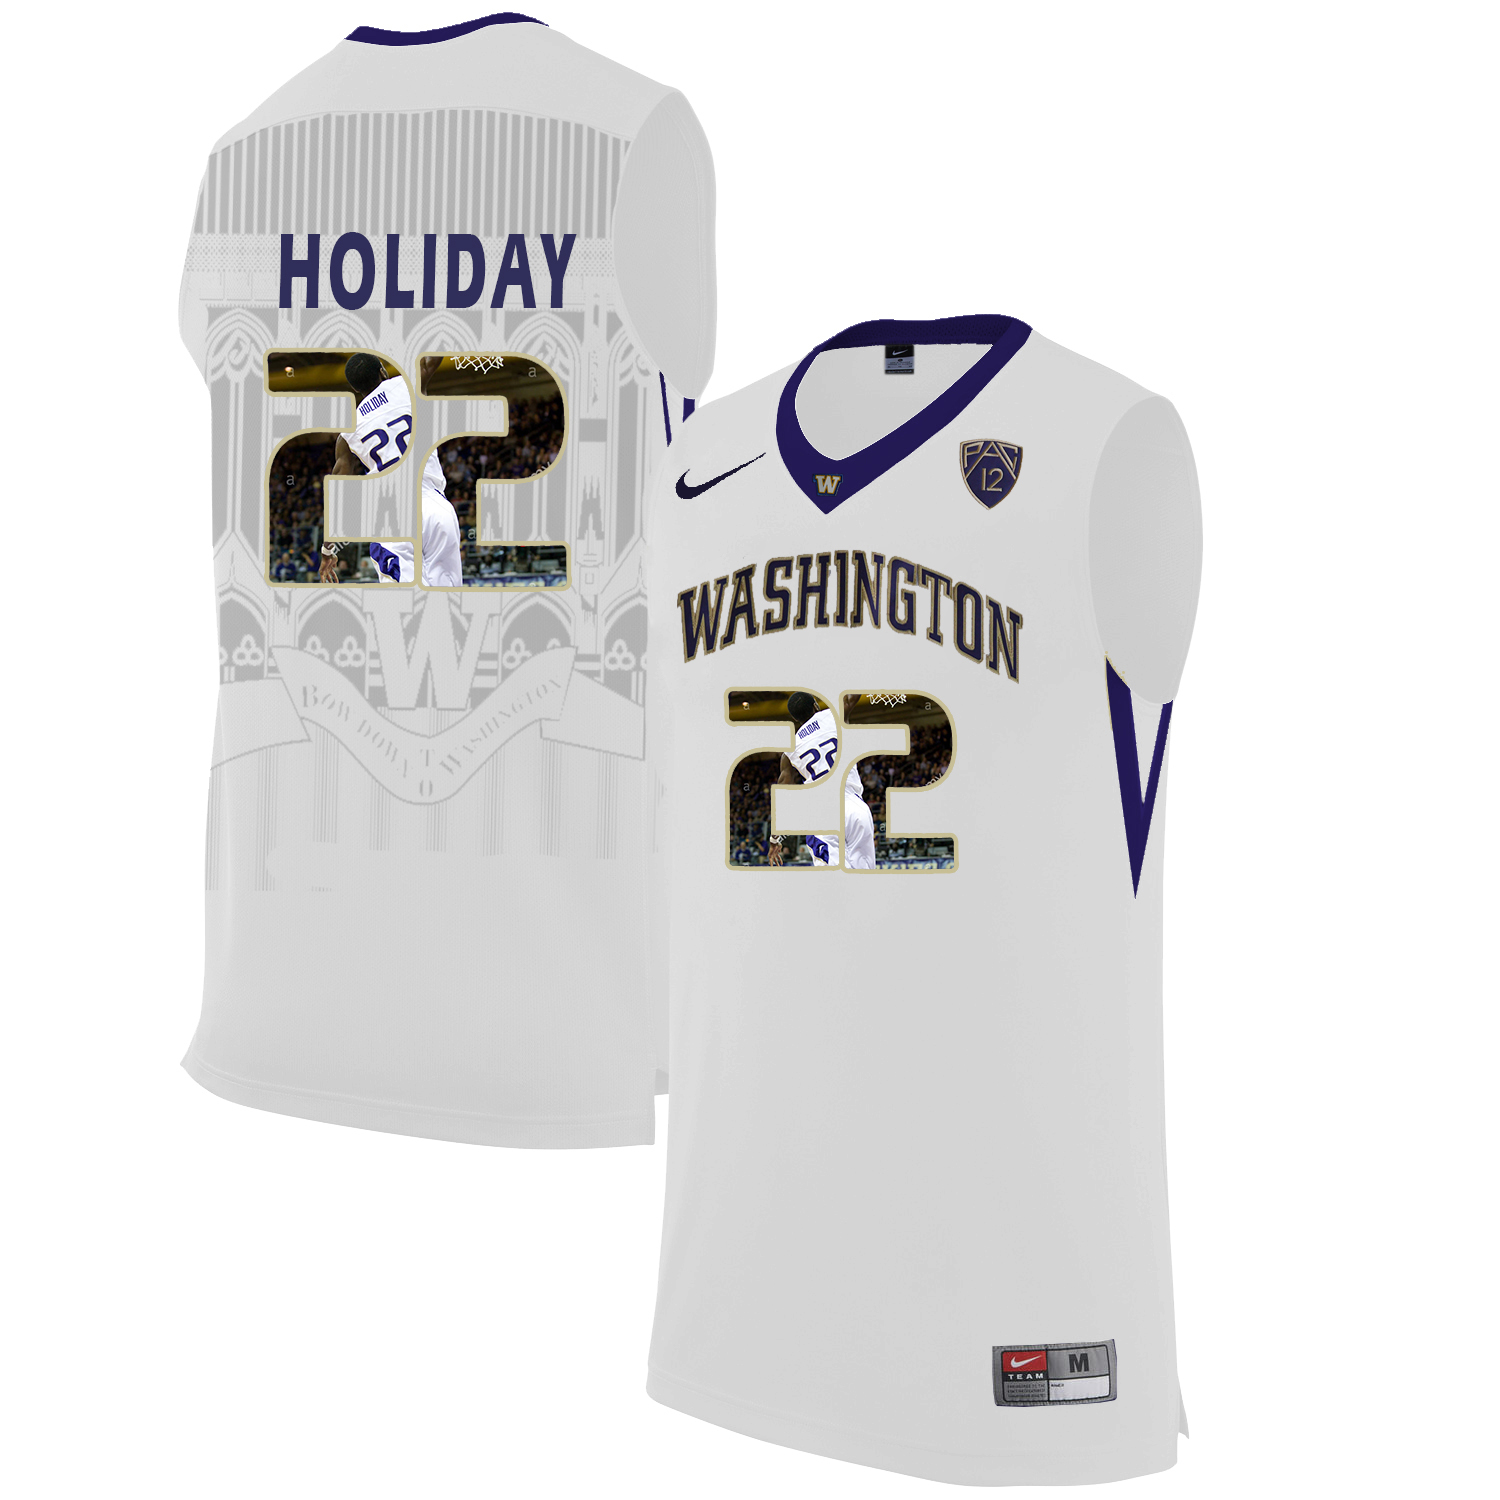 Washington Huskies 22 Justin Holiday White With Portait College Basketball Jersey